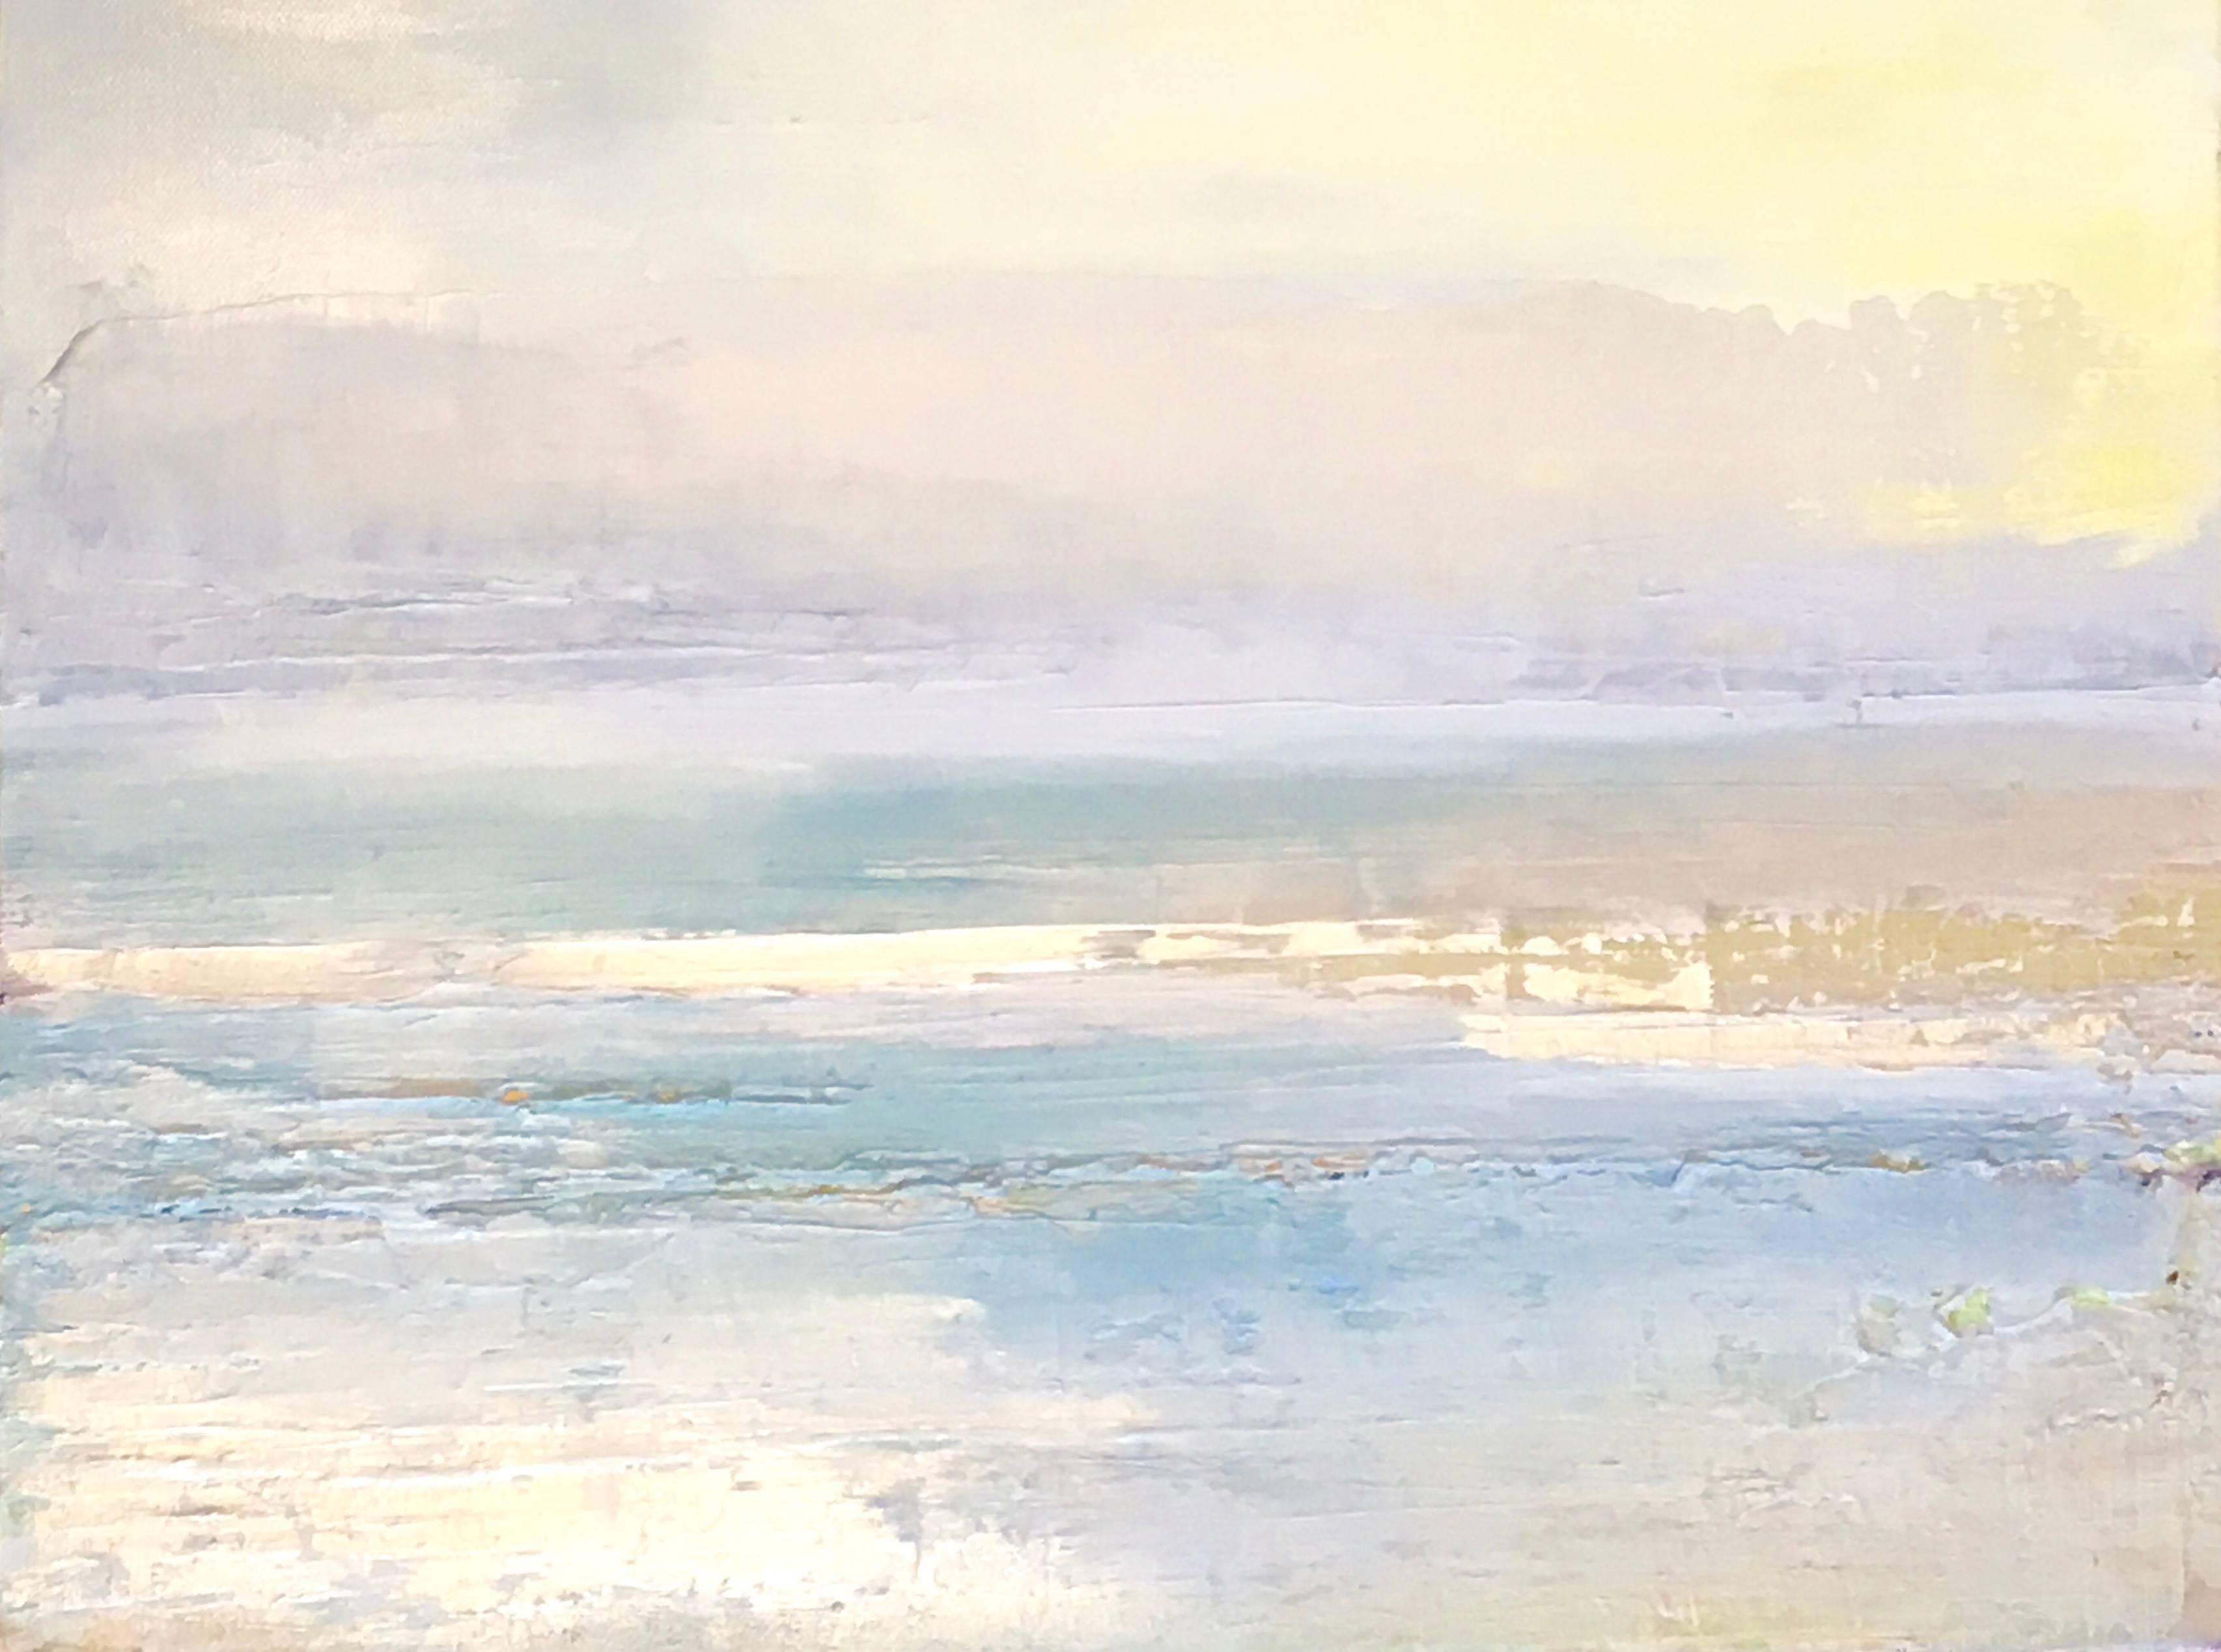 Barbara Sussberg Landscape Painting - 'Violet Evening in Venice', Abstract Impressionist Oil on Canvas Landscape